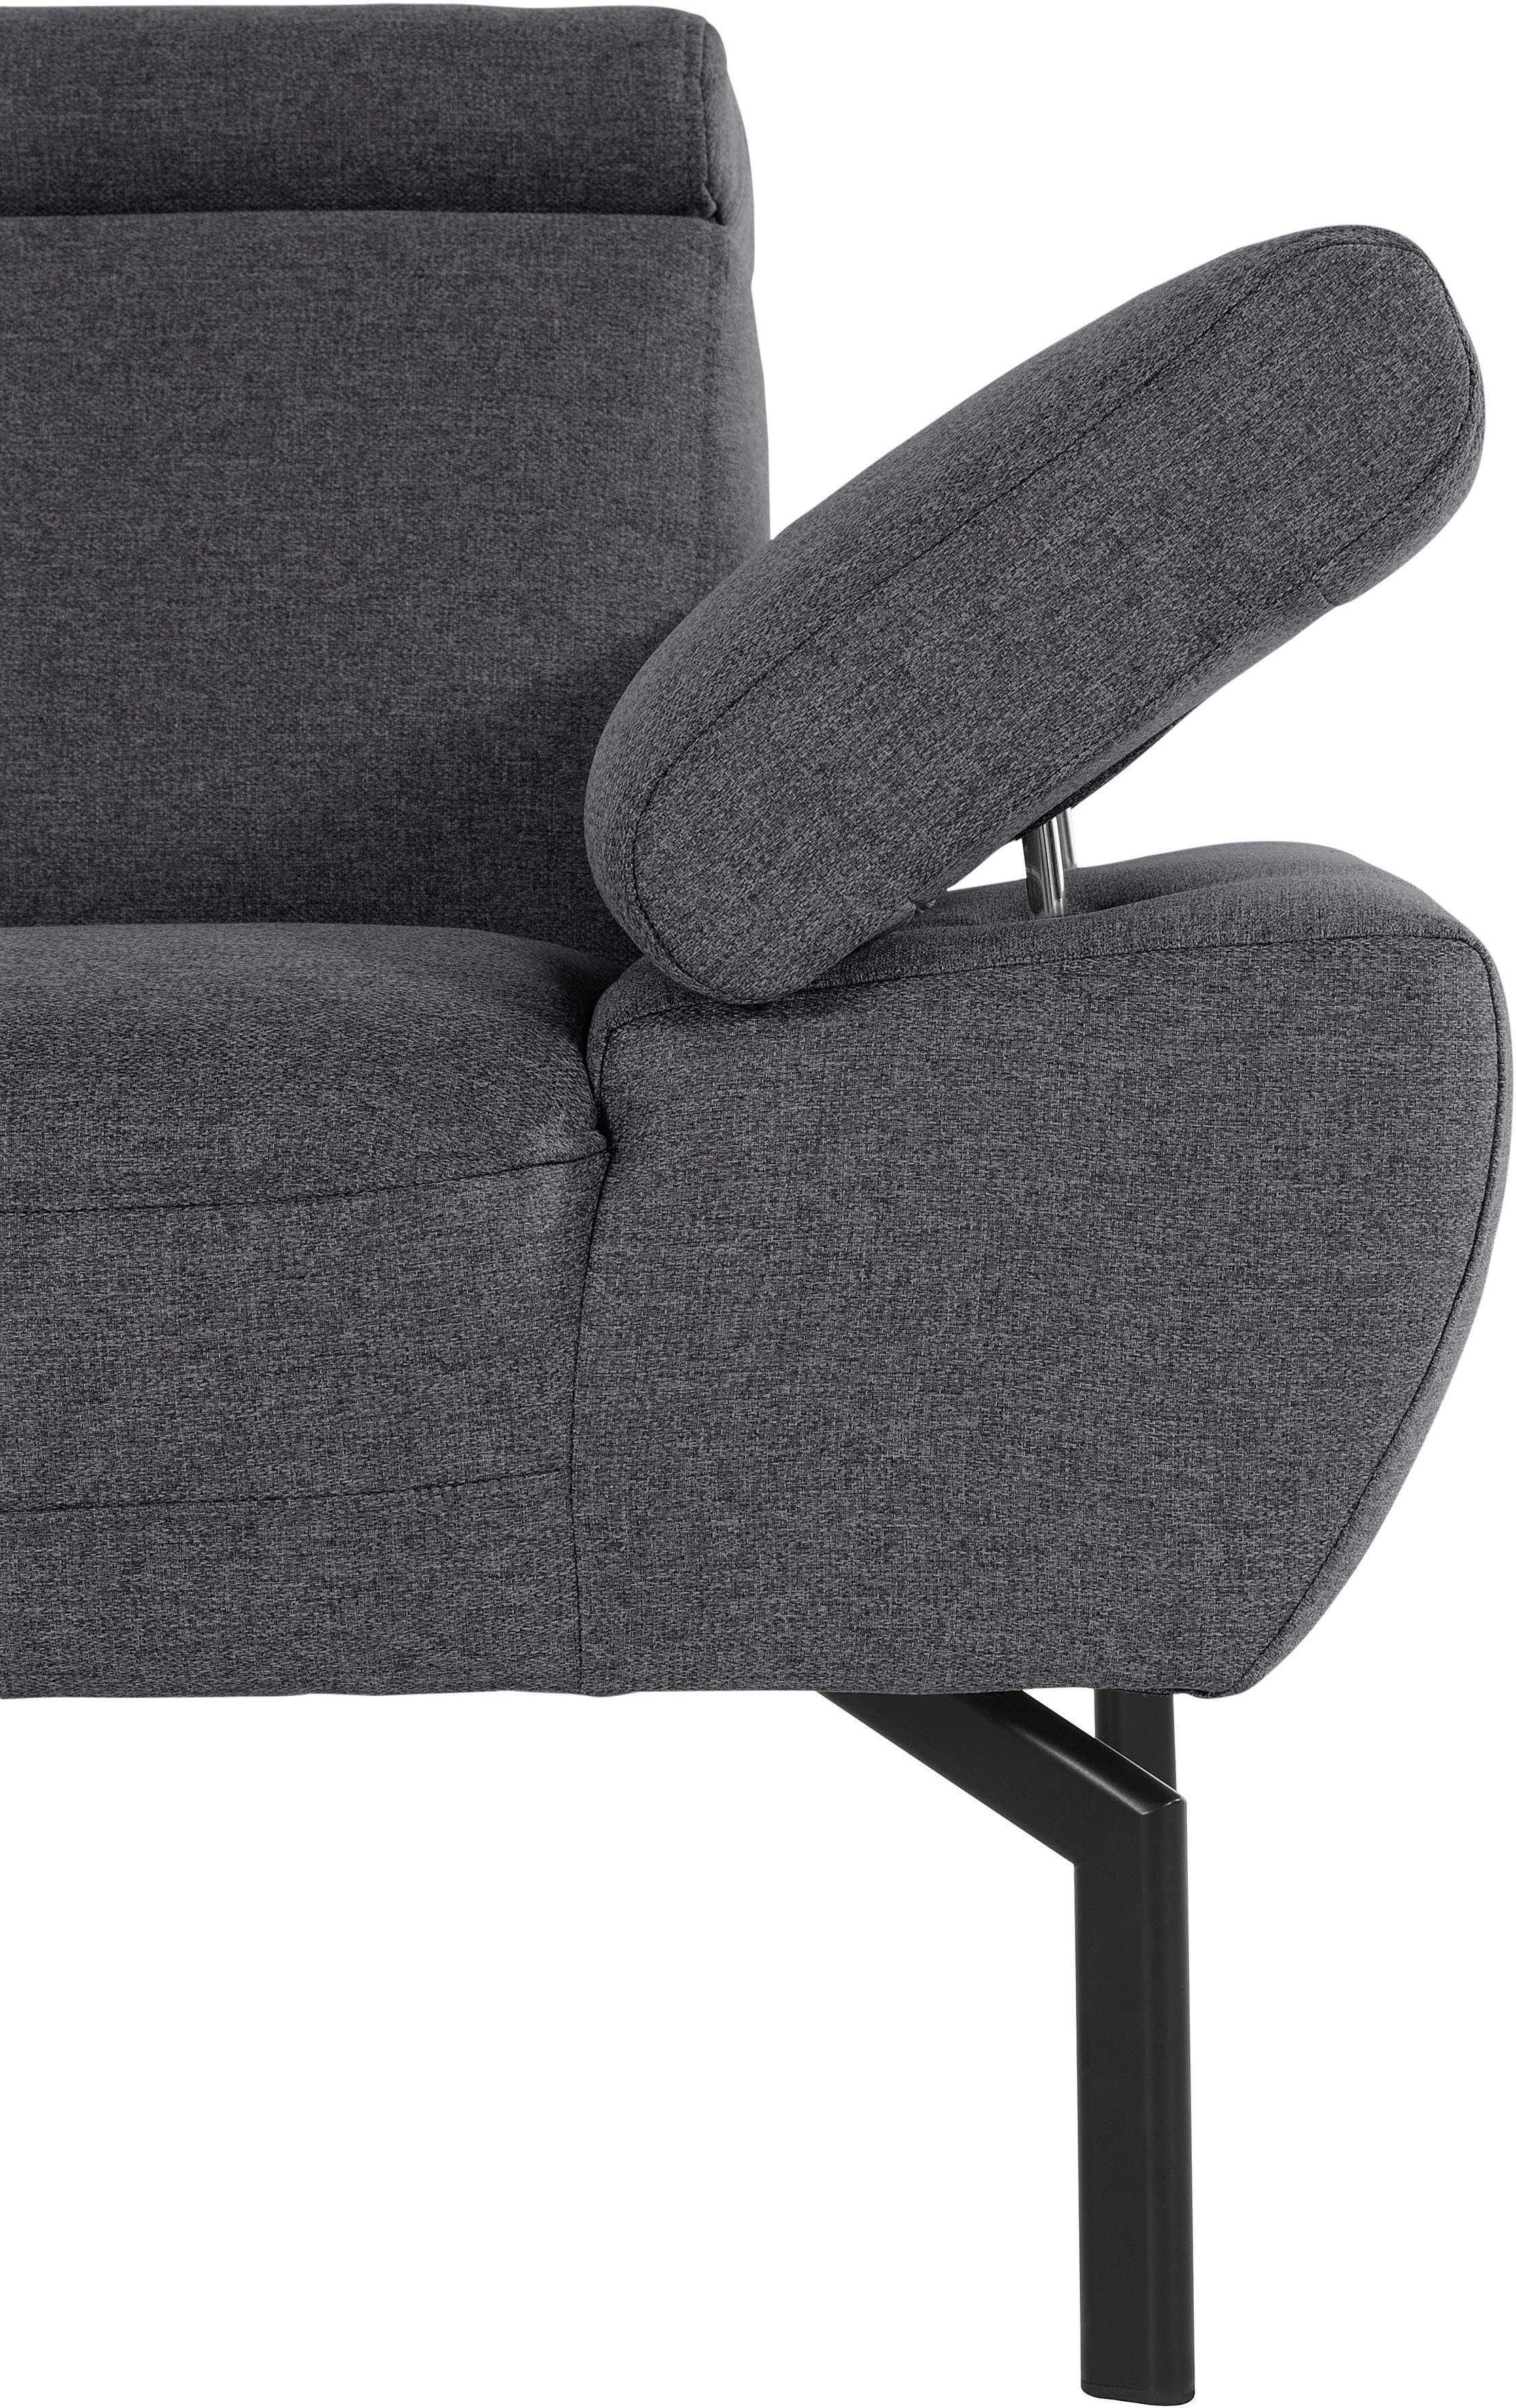 Style of Sessel Luxus, mit Places Luxus-Microfaser Lederoptik in wahlweise Rückenverstellung, Trapino